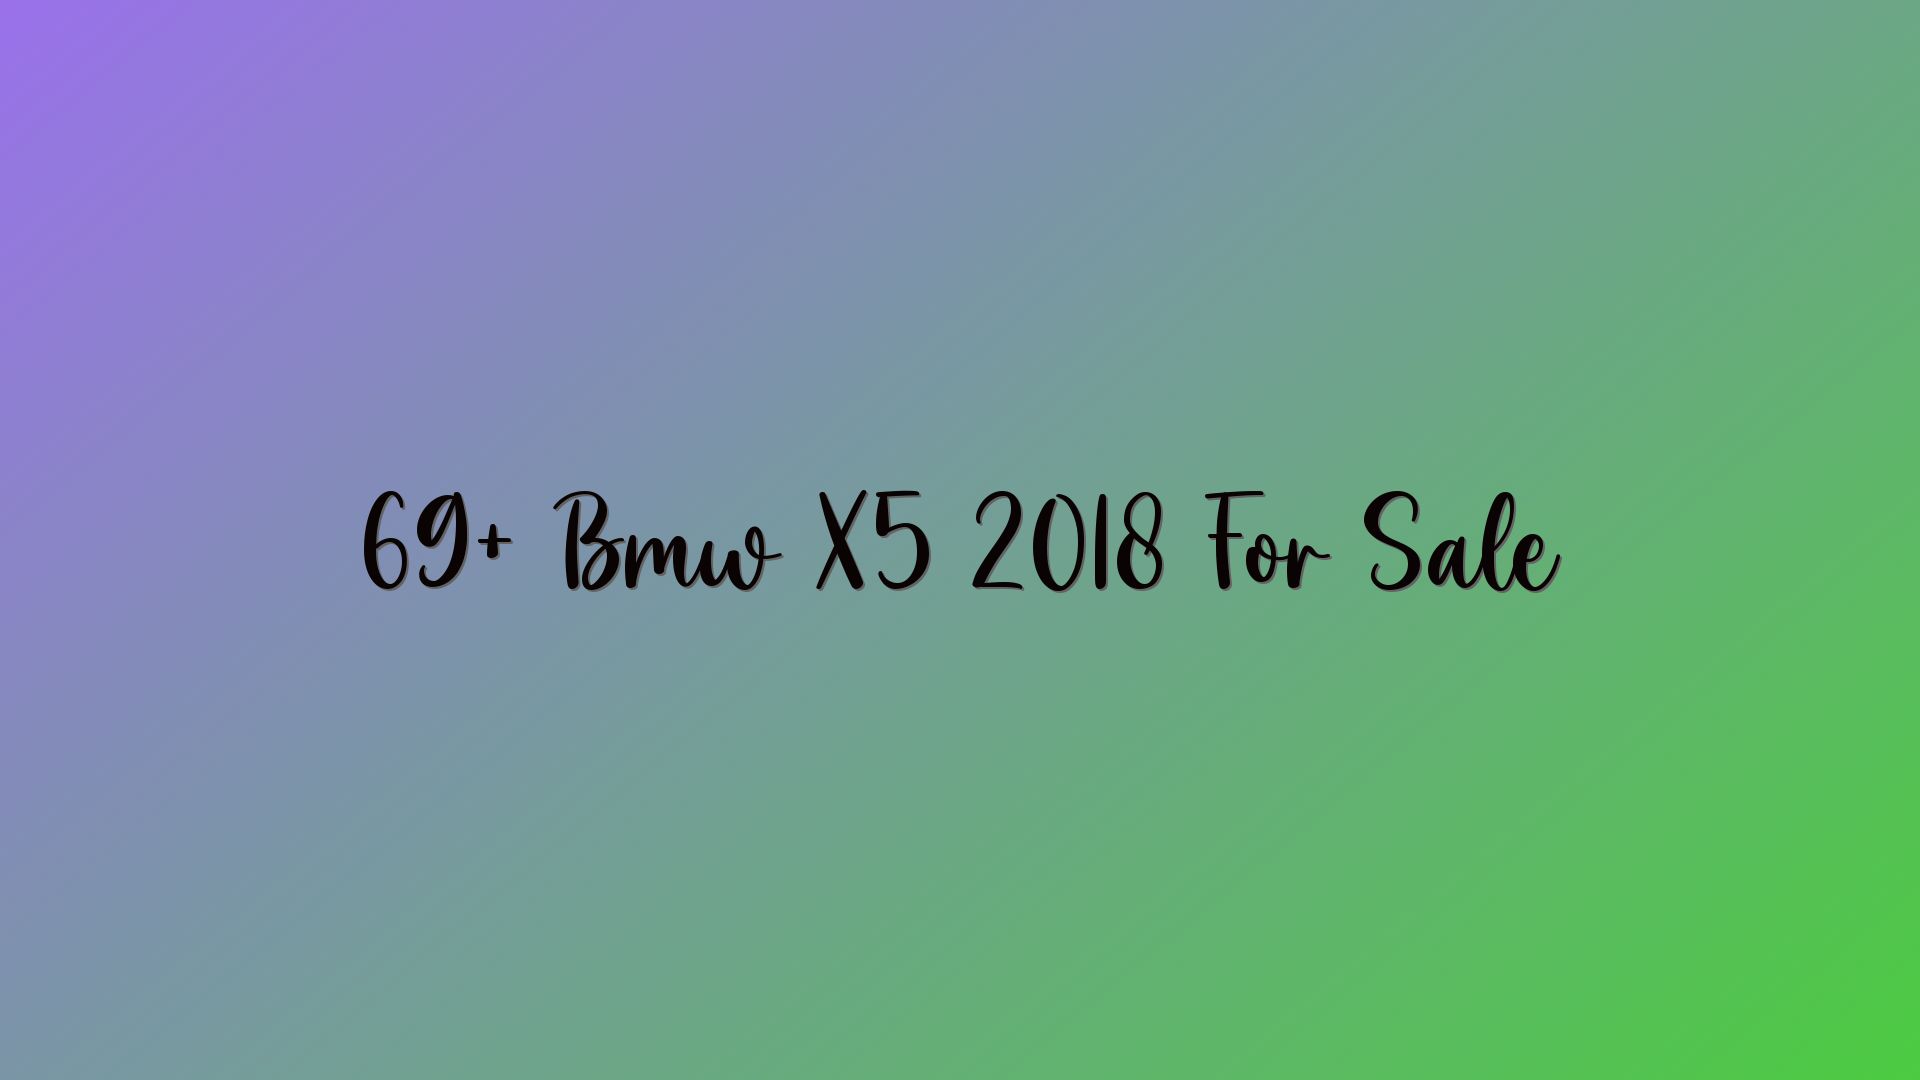 69+ Bmw X5 2018 For Sale